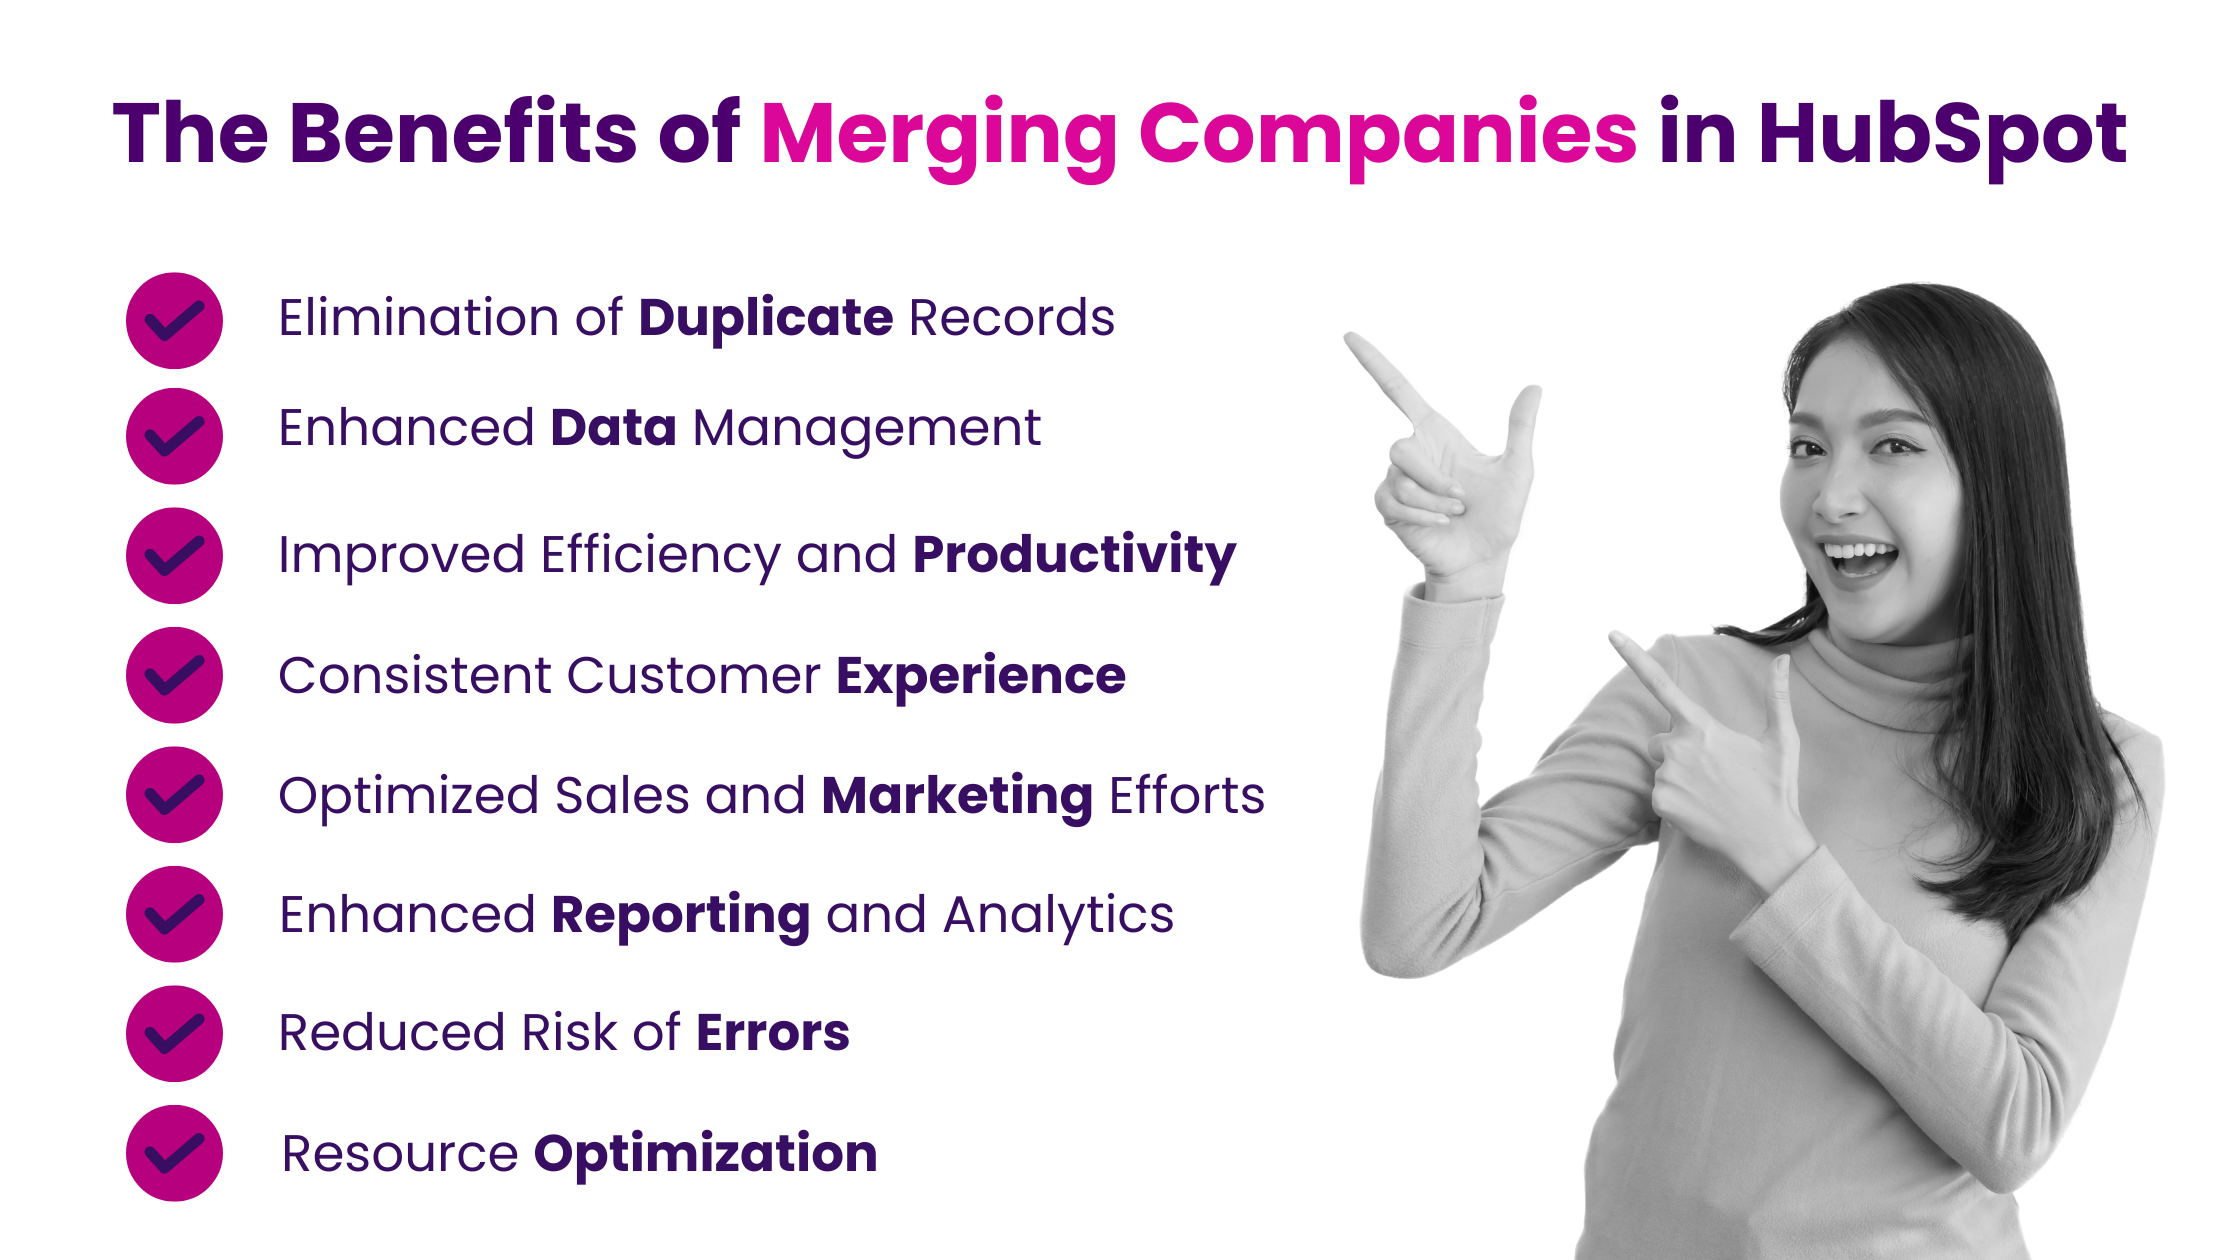 The Benefits of Merging Companies in HubSpot